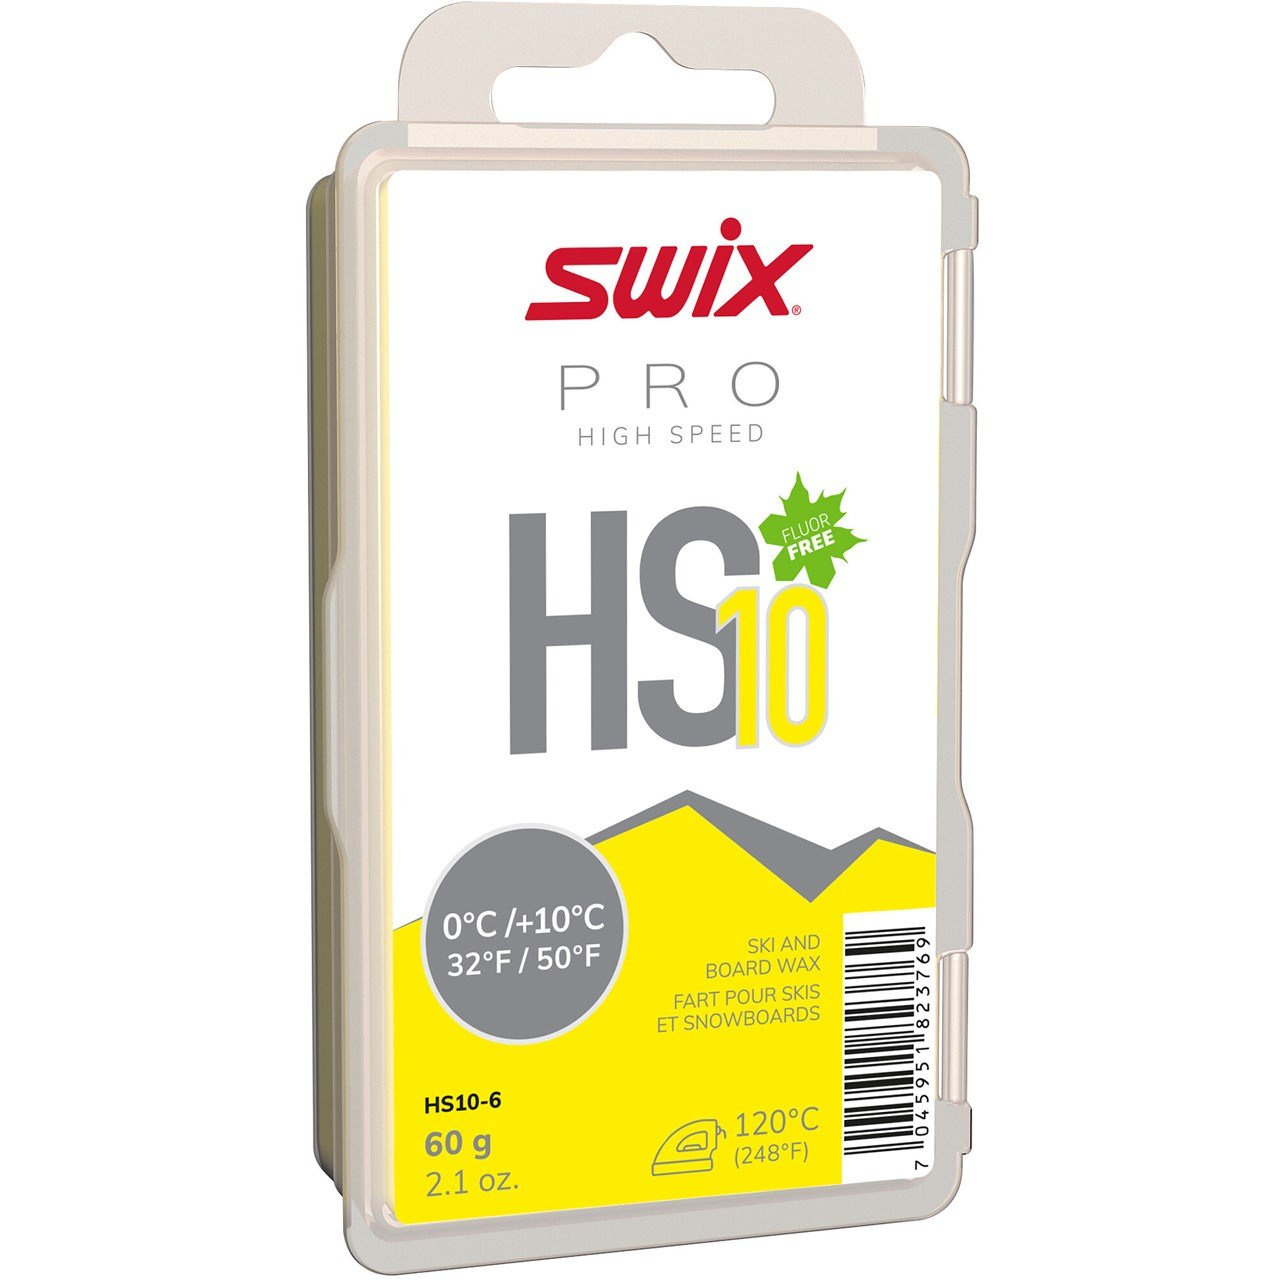 Swix High Speed HS10-6 (0/+4°C) 60g